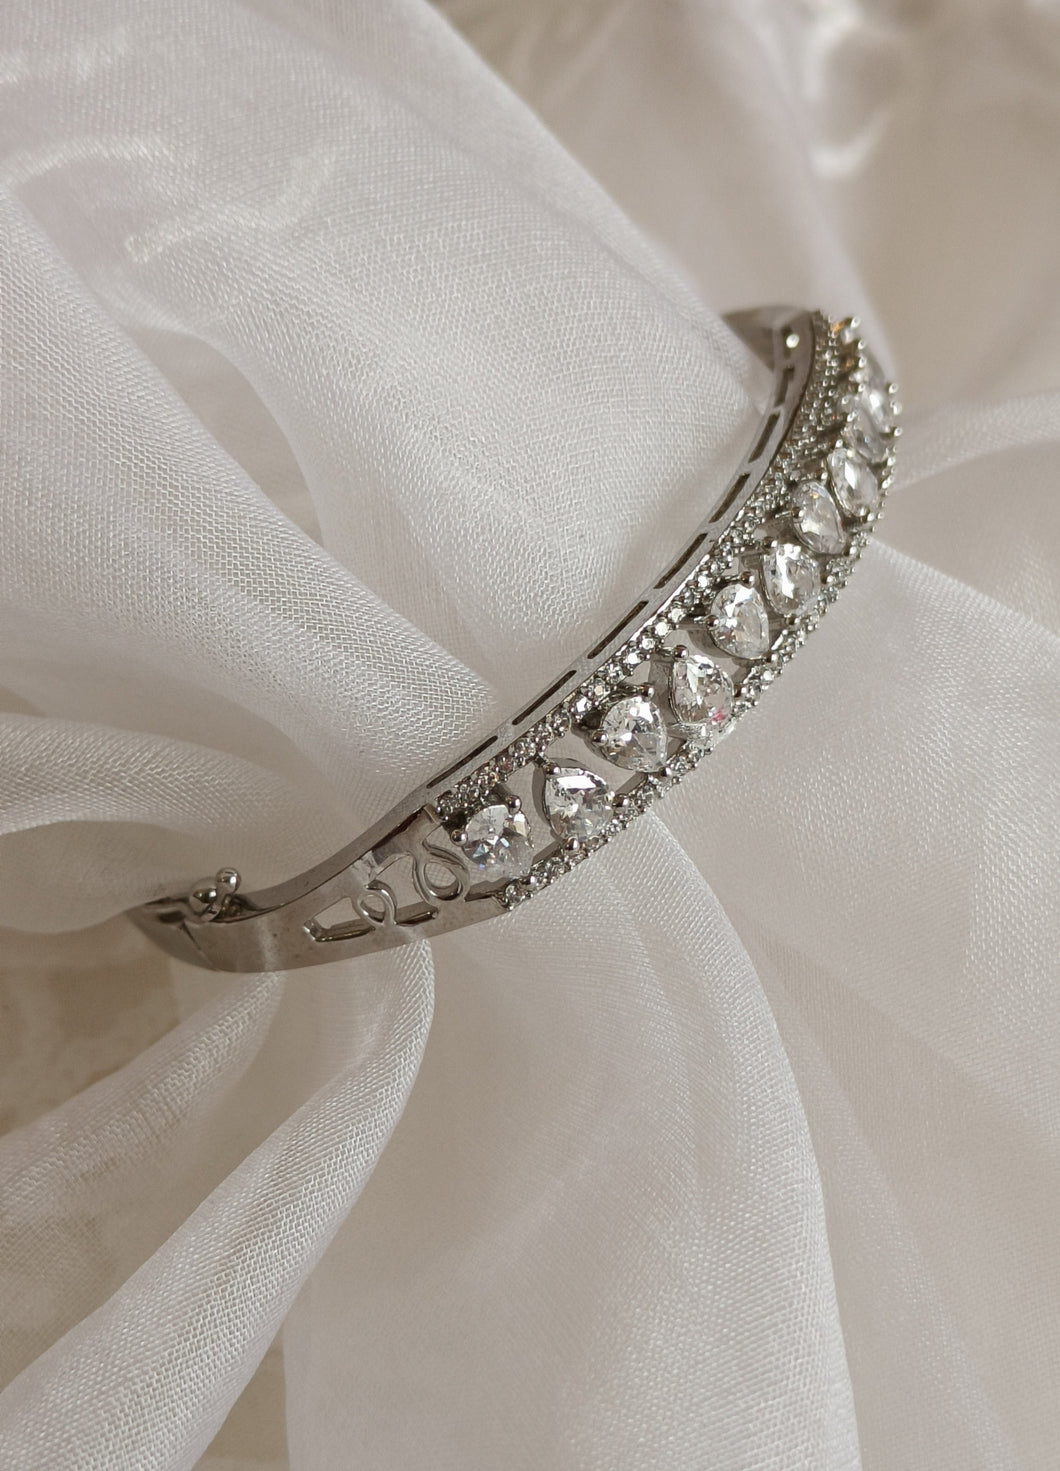 Magnolia Pear Silver Bracelet